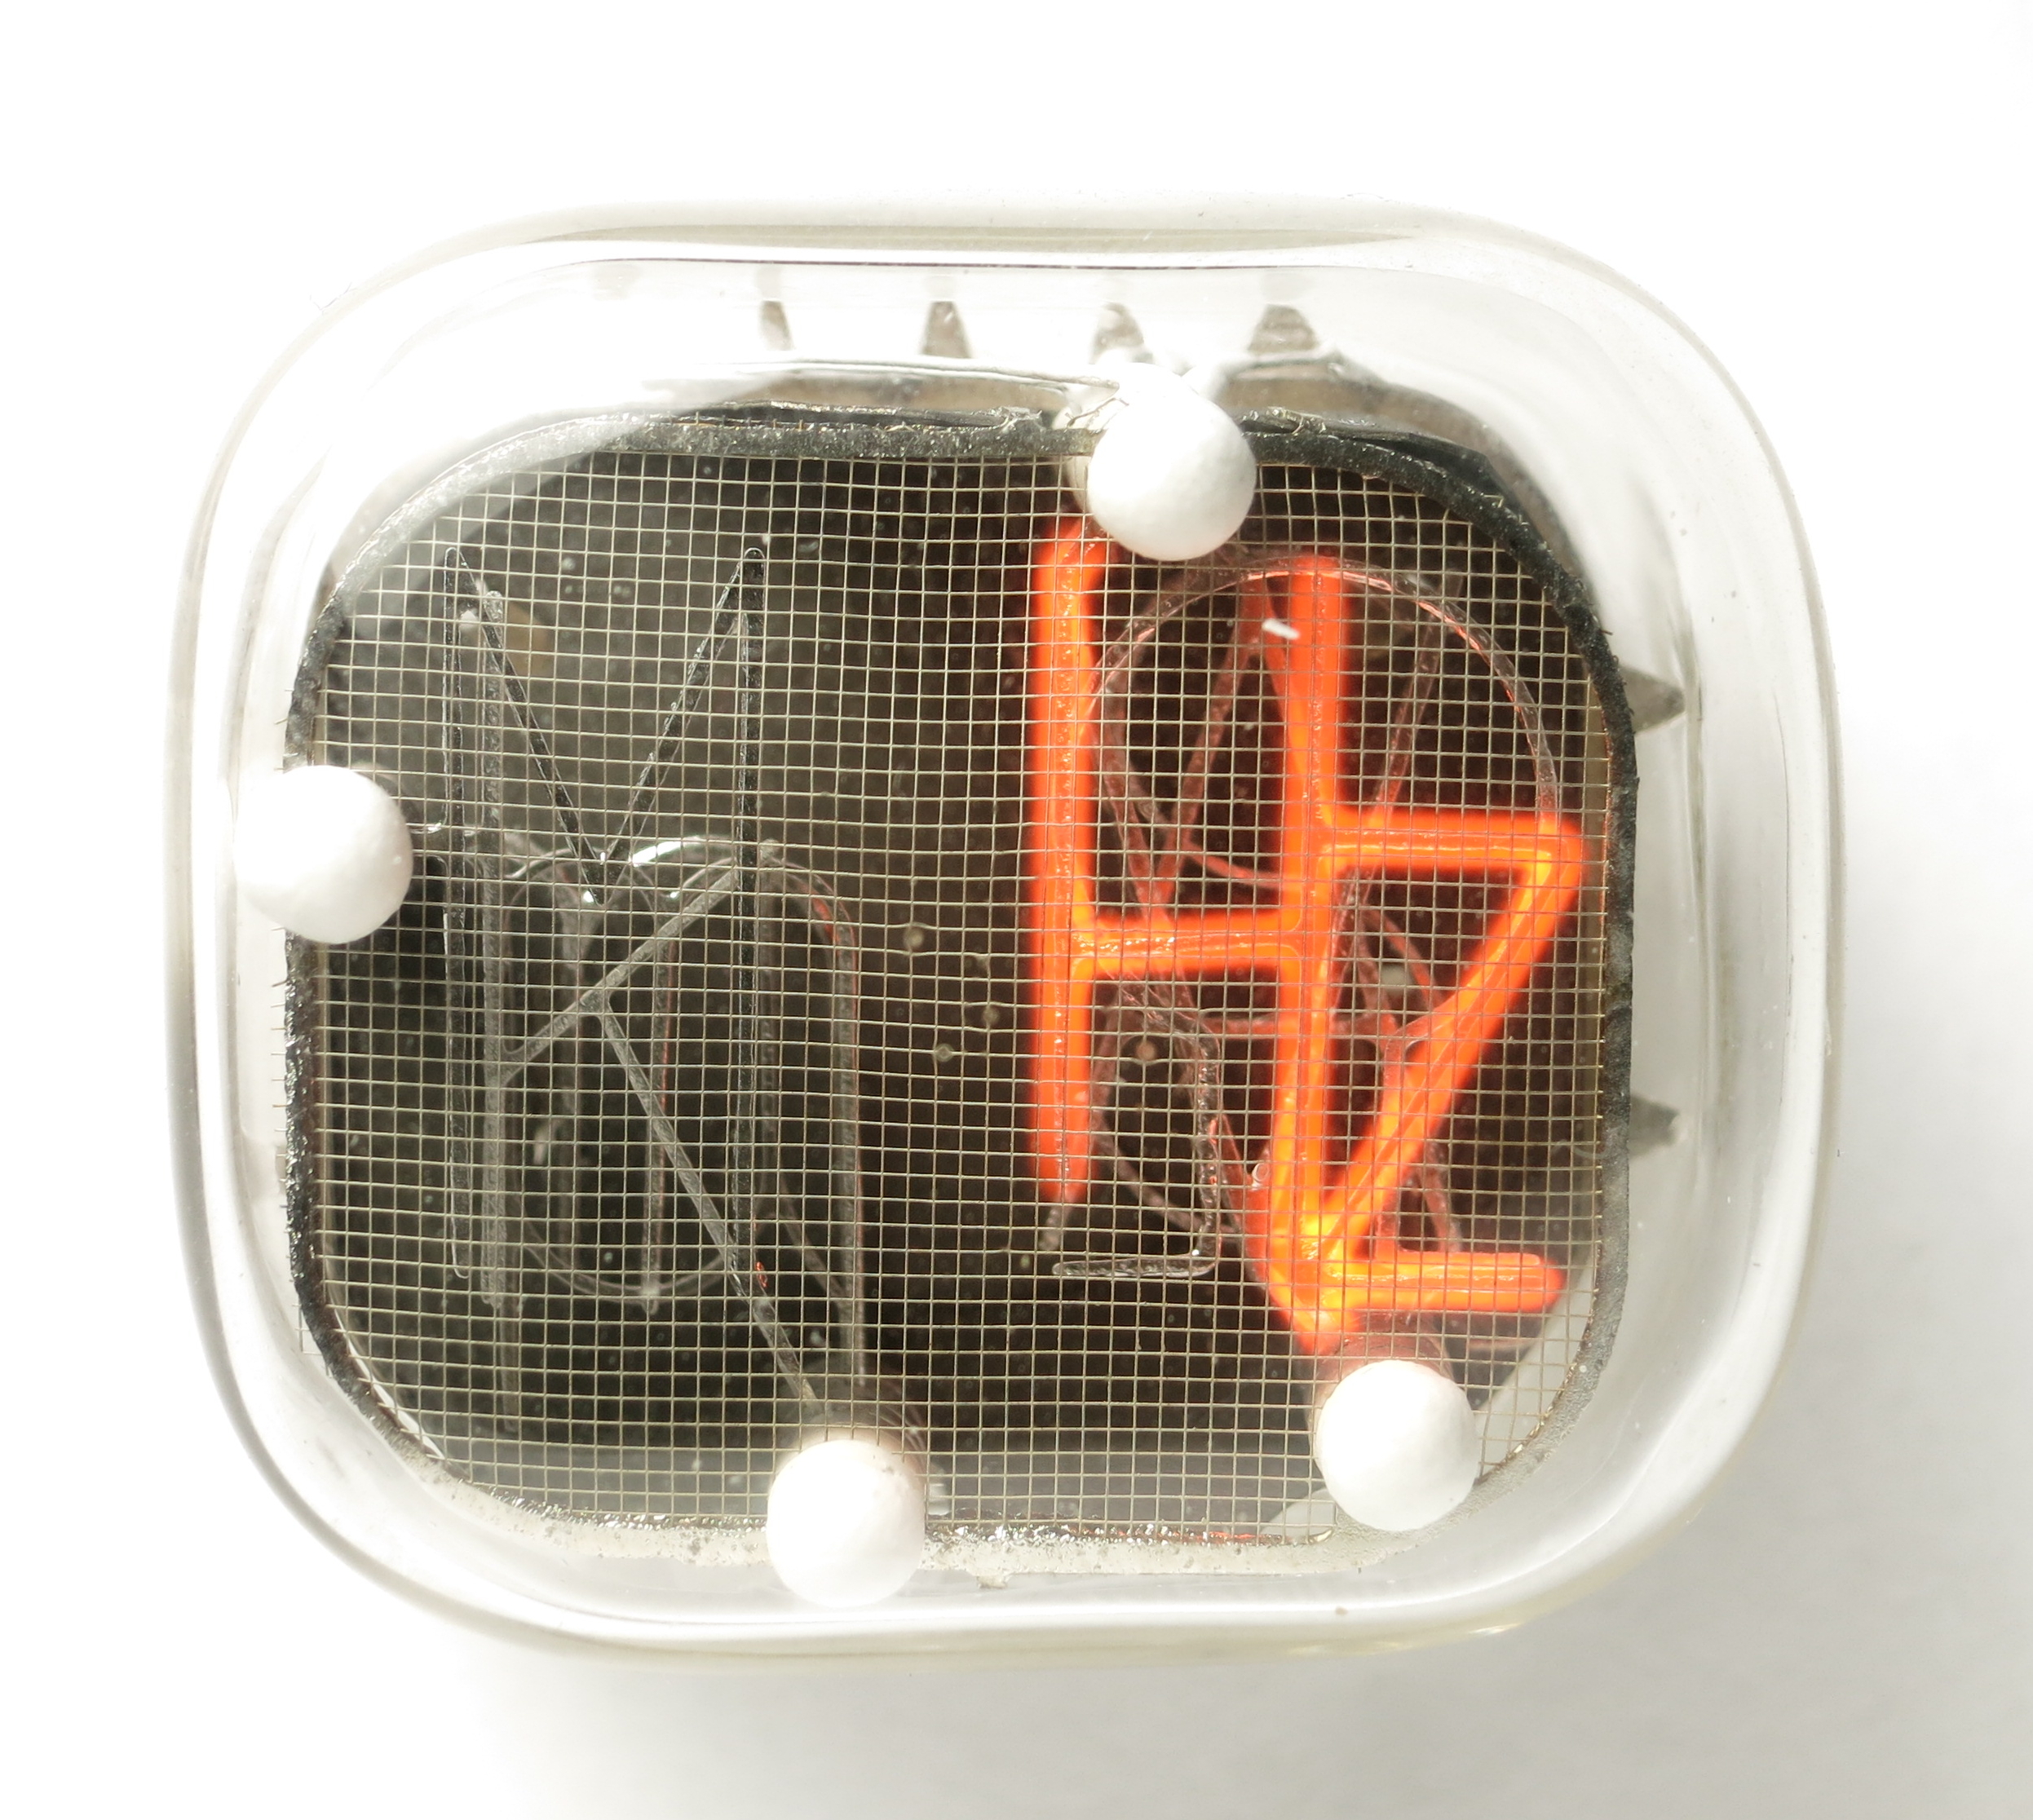 The symbol 'Hz' of the IN-XX